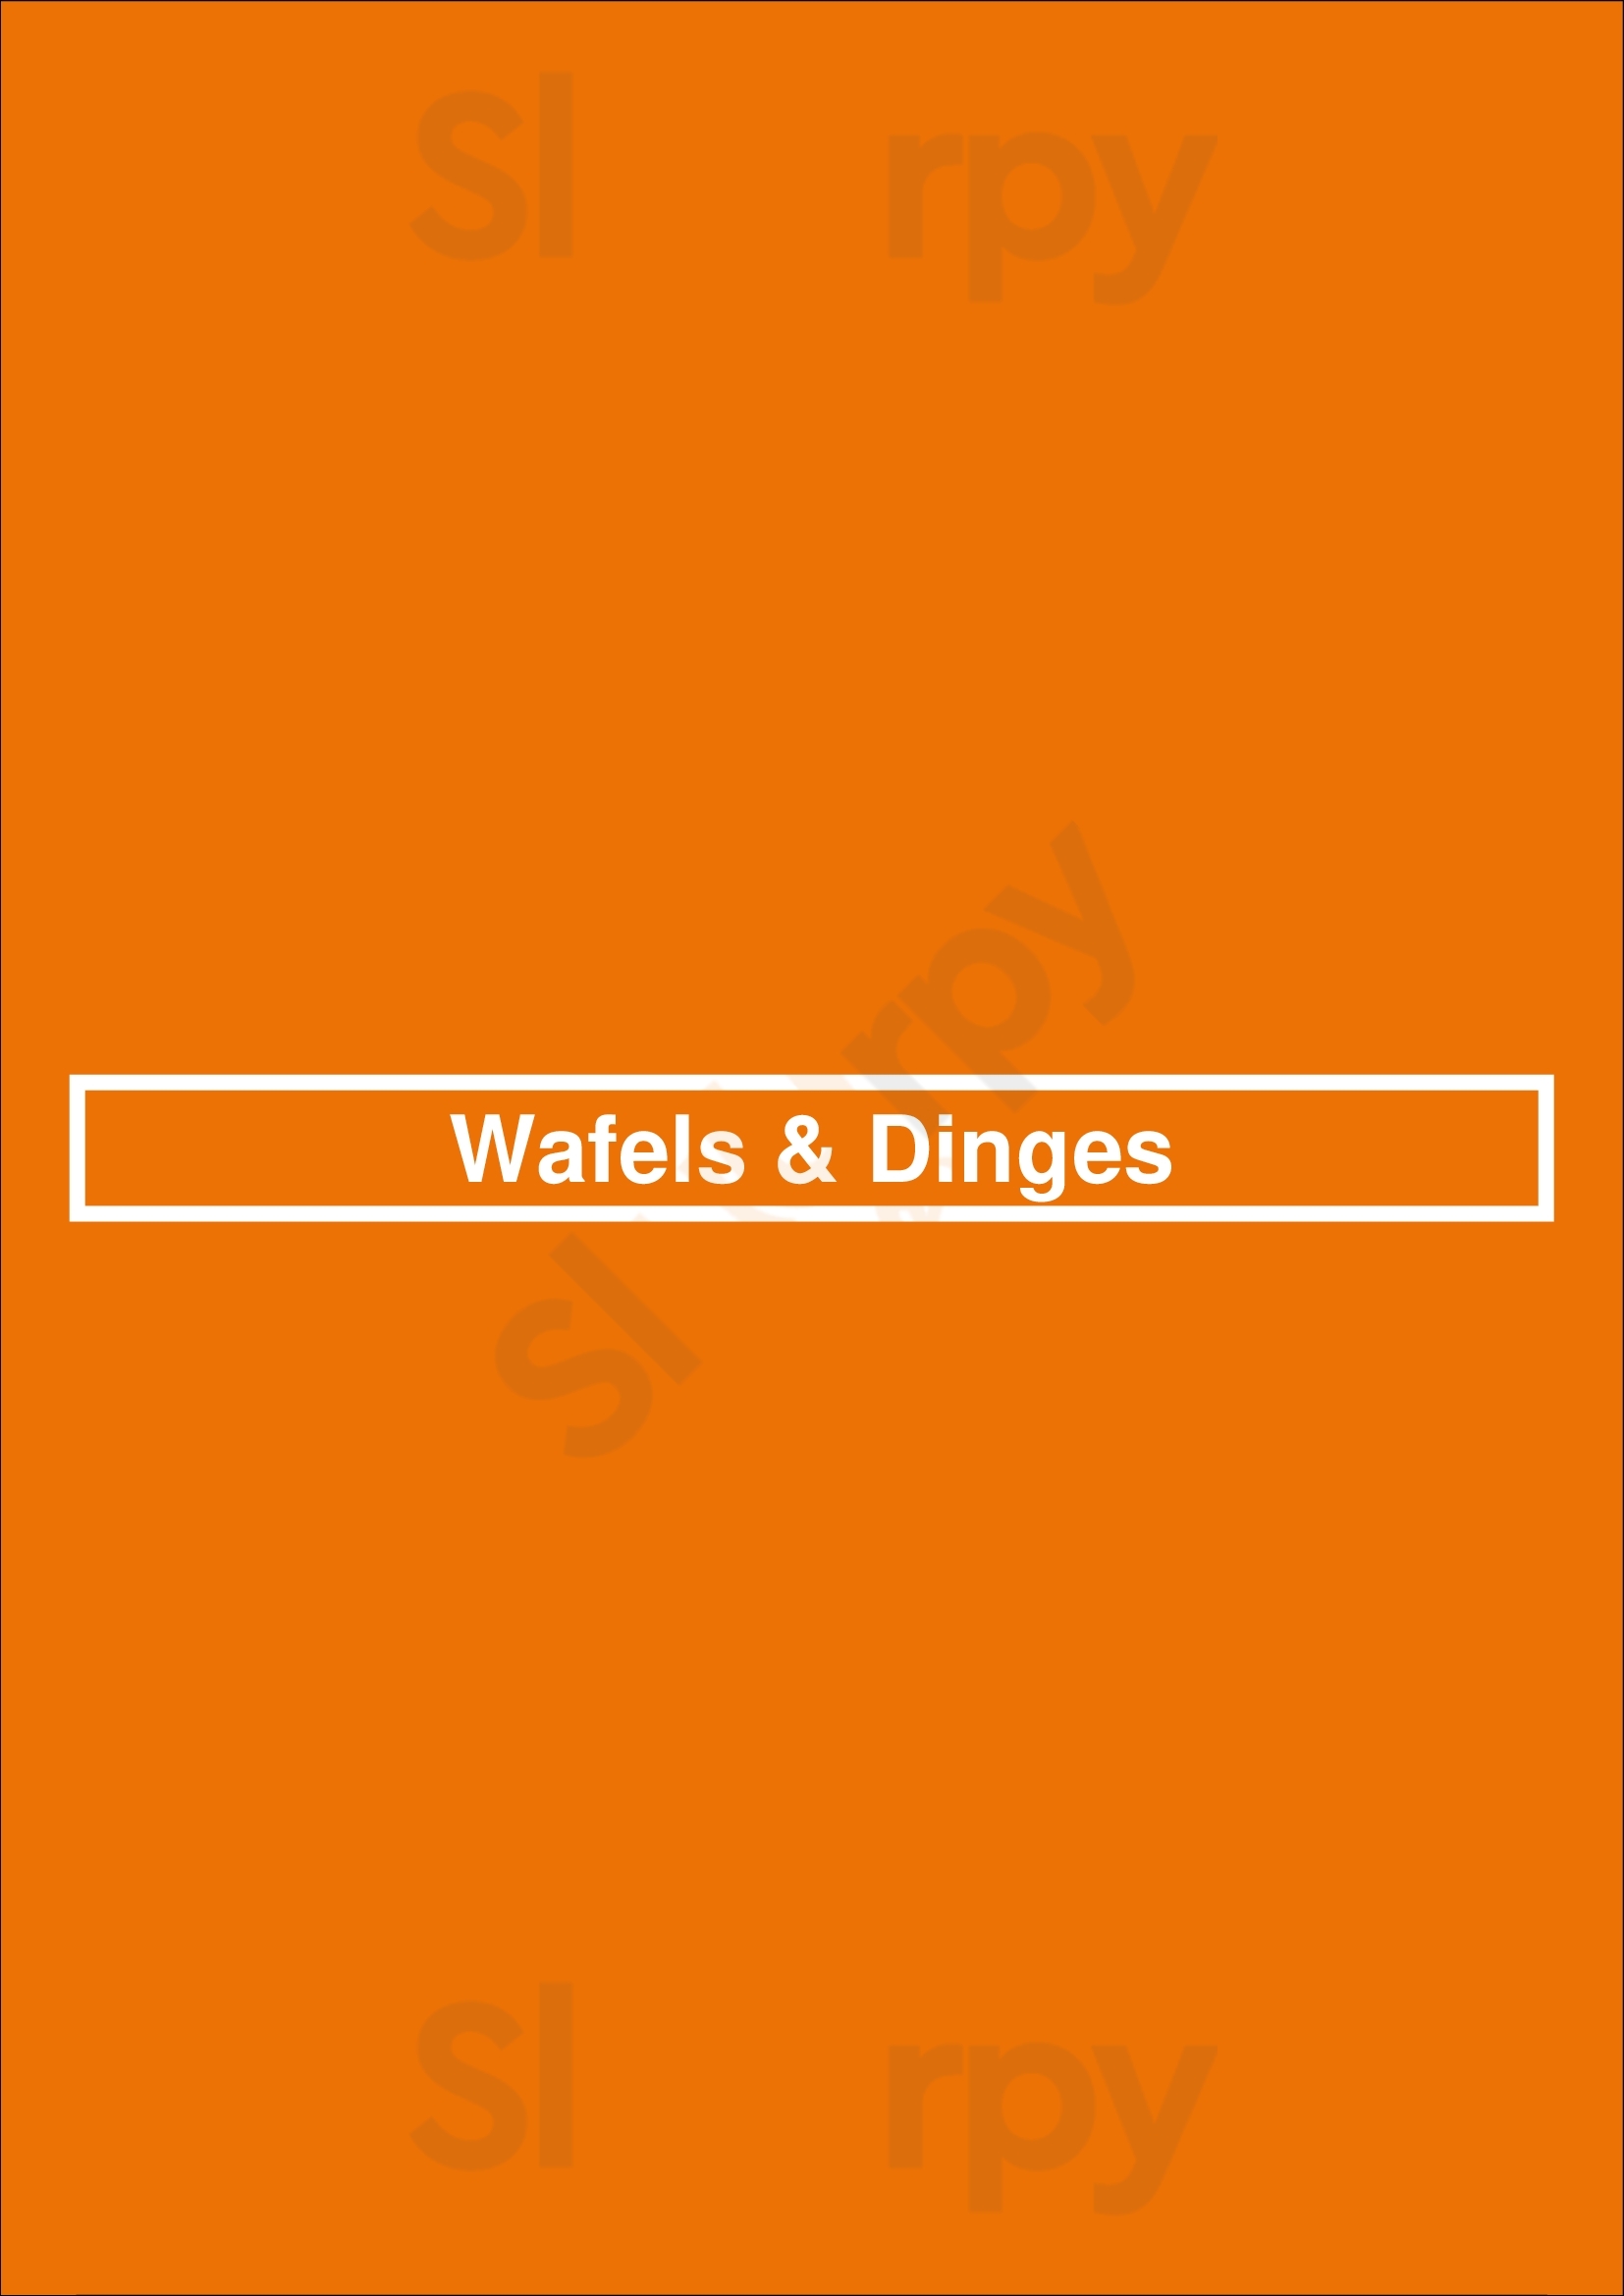 Wafels & Dinges New York City Menu - 1